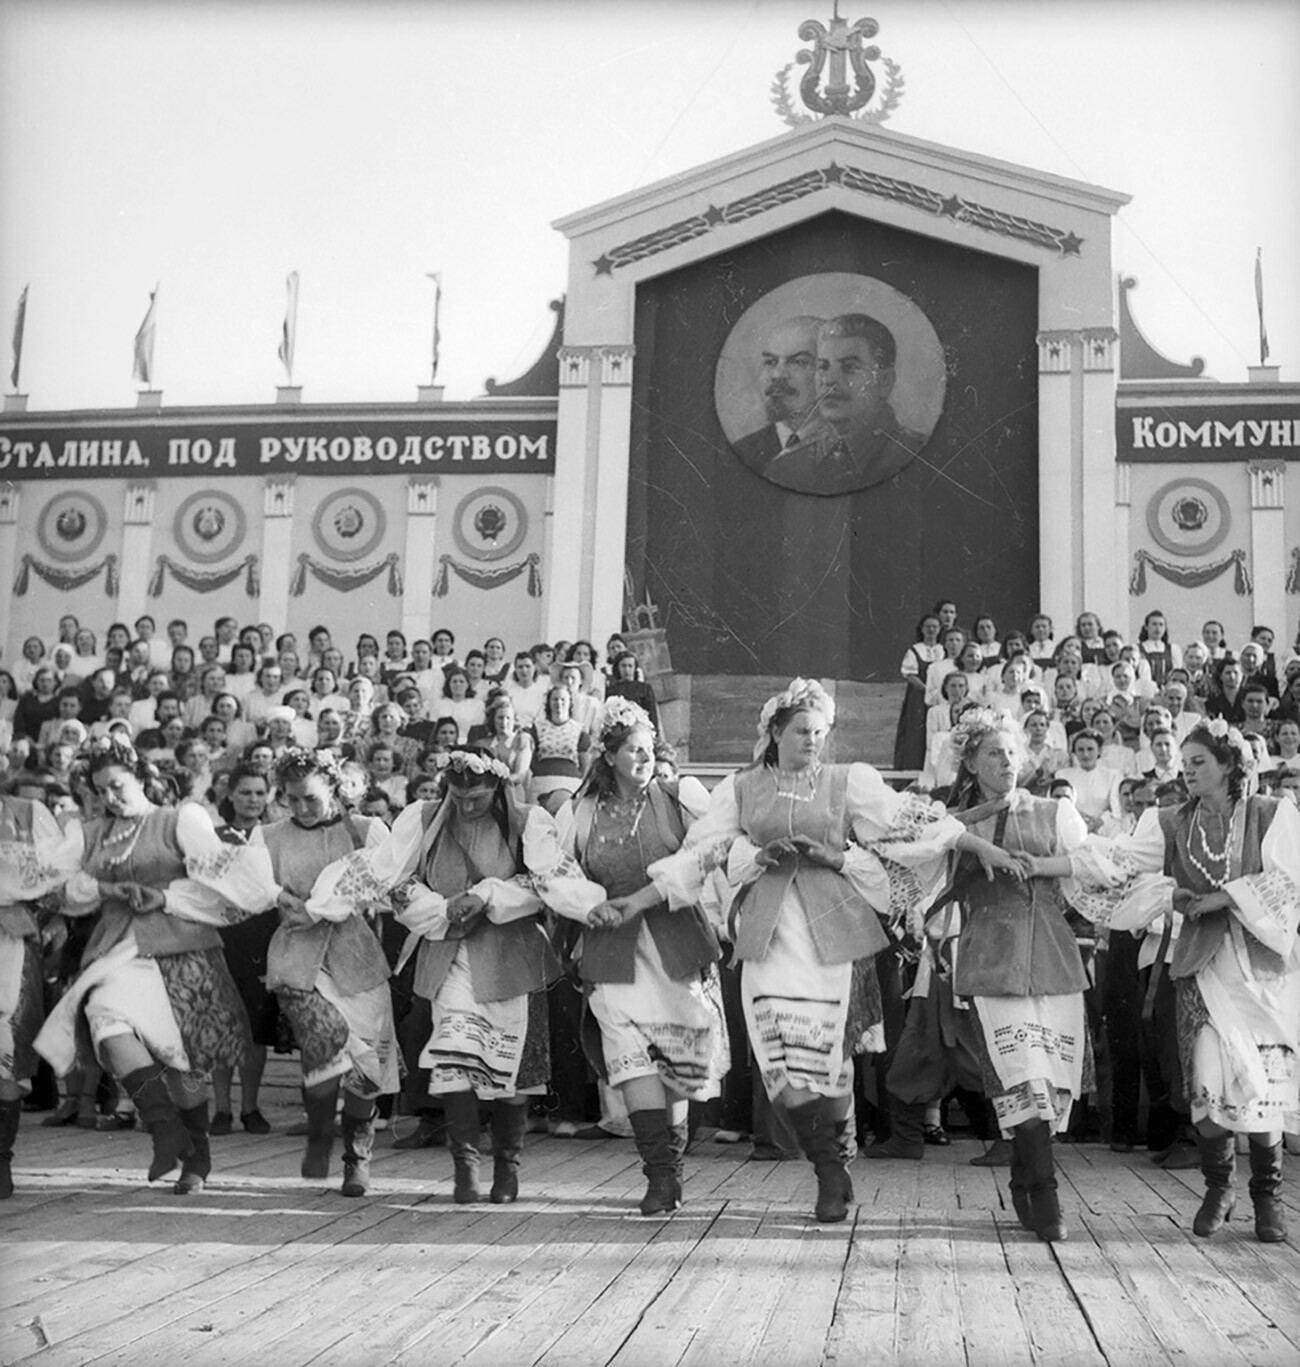 Fiesta de la cosecha en Krasnodar, 1953

